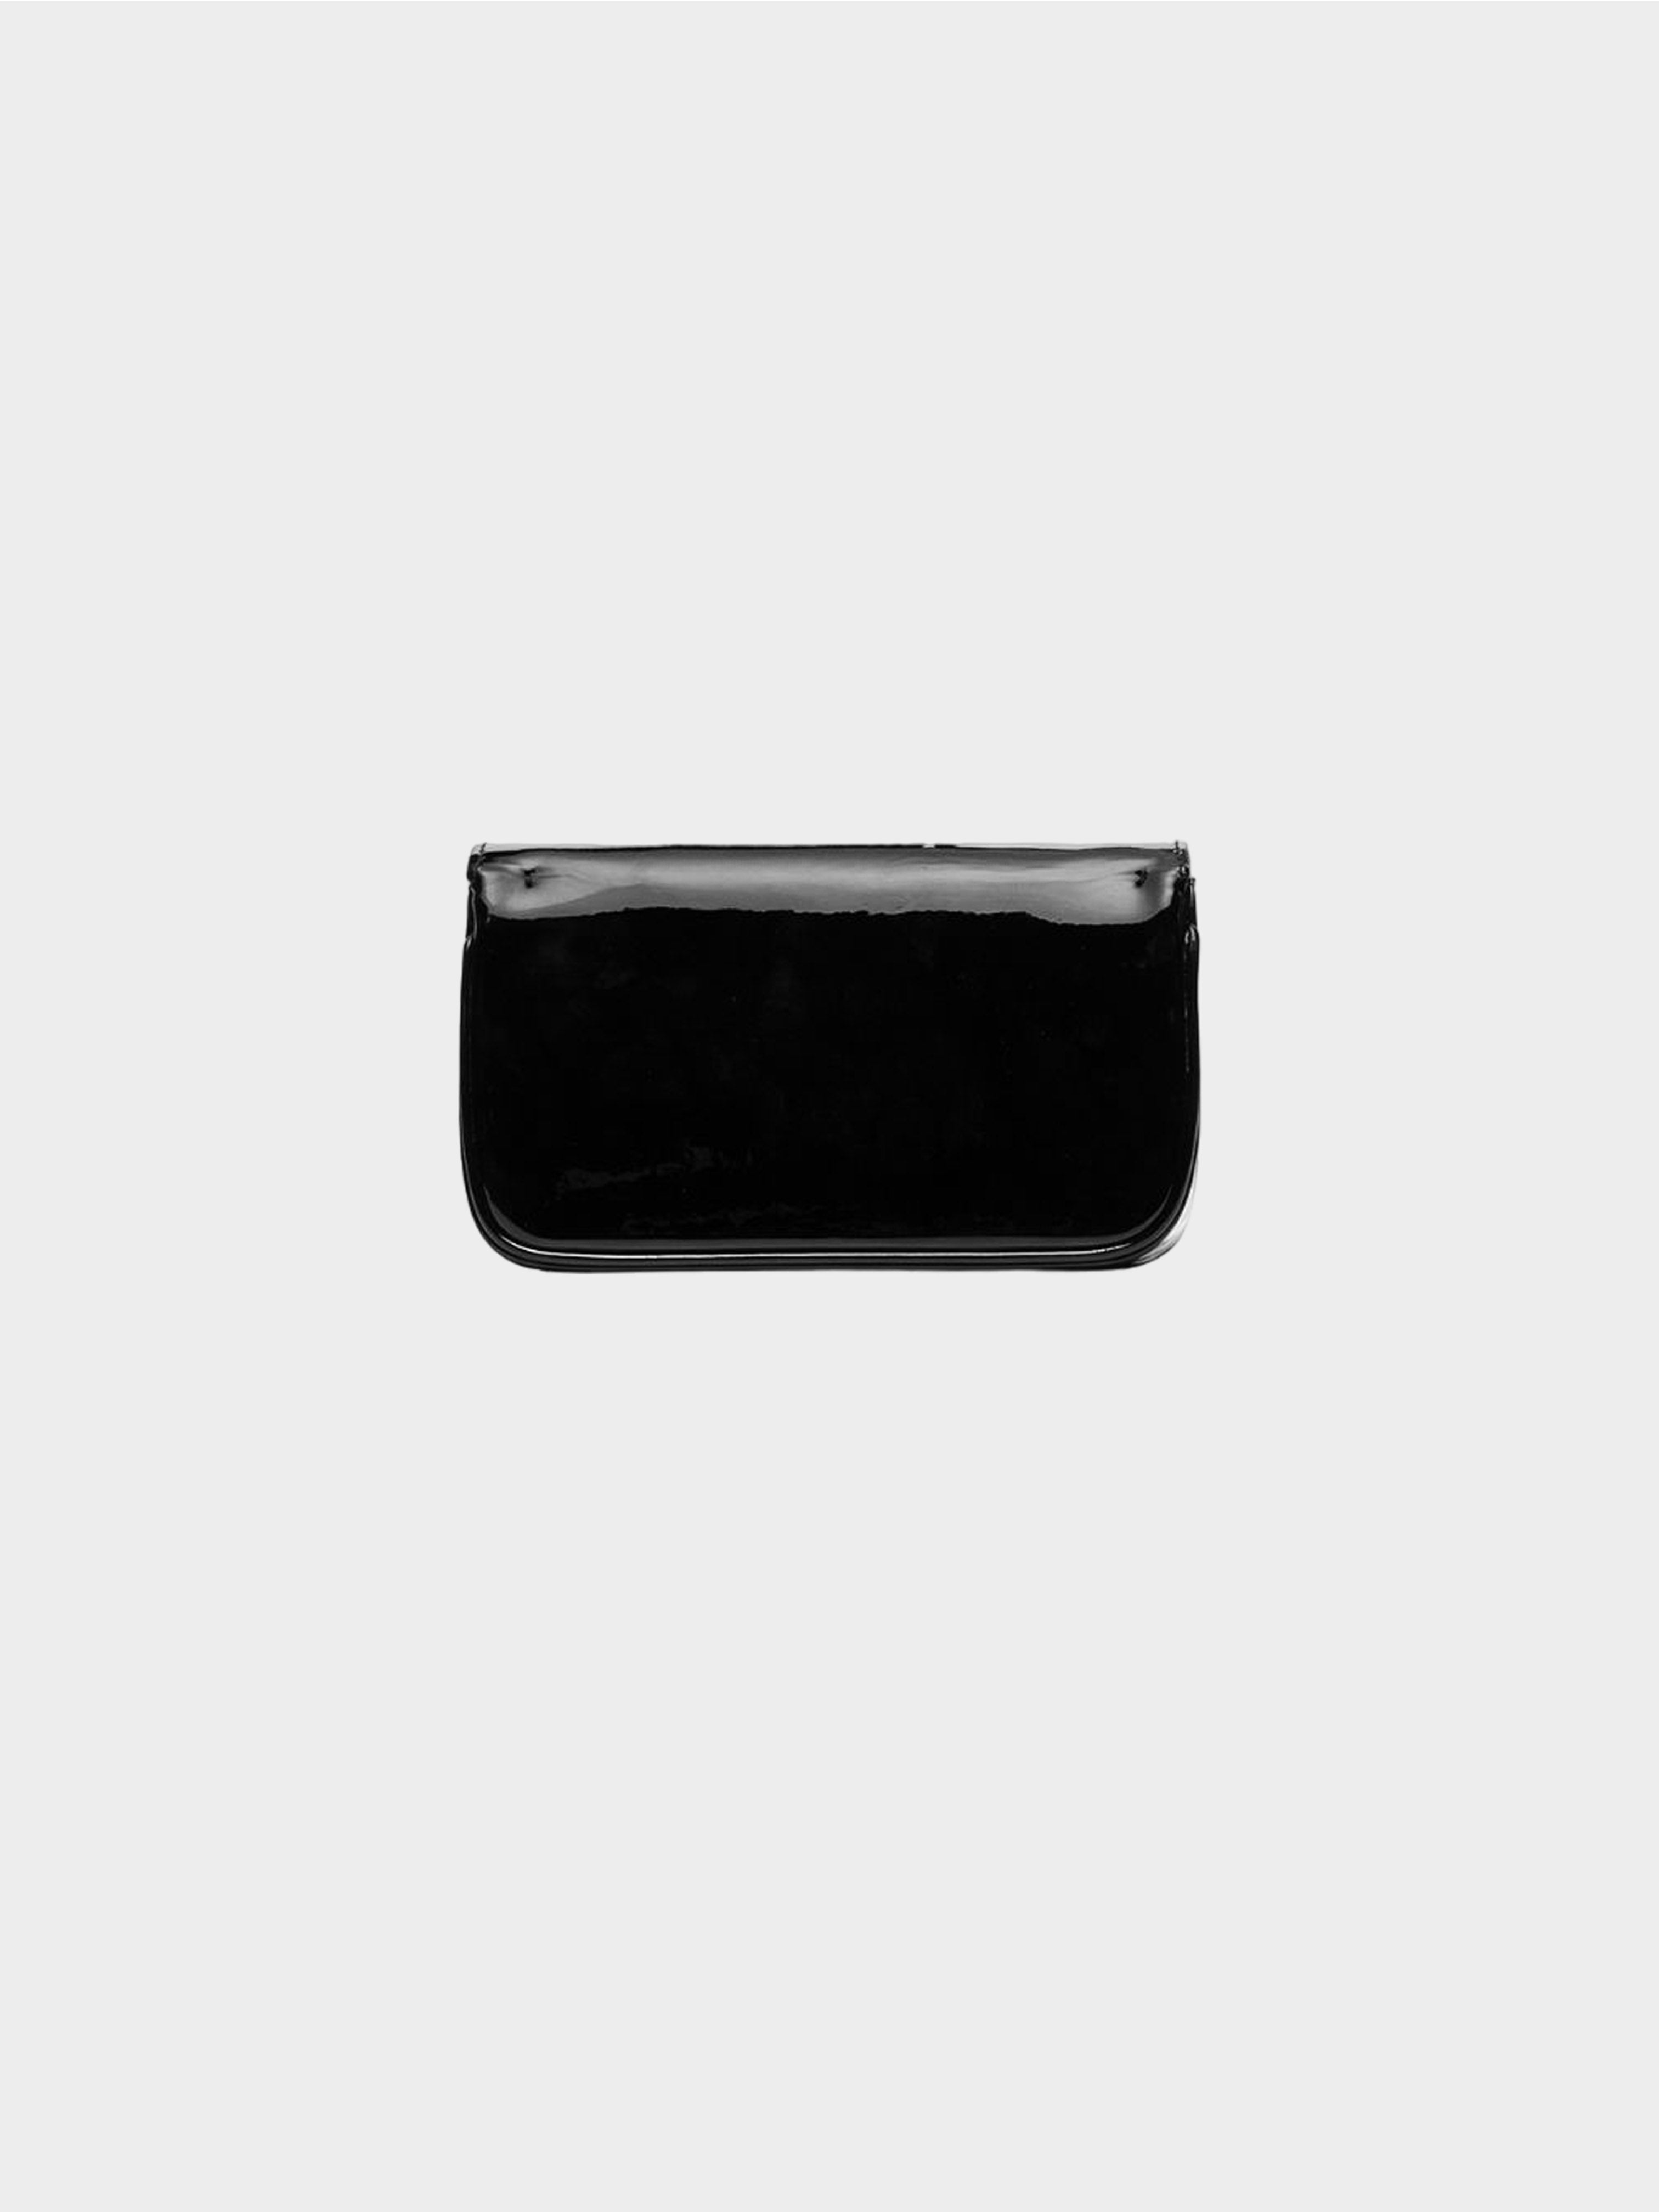 Versace 2019 Black Safety Pin Clutch